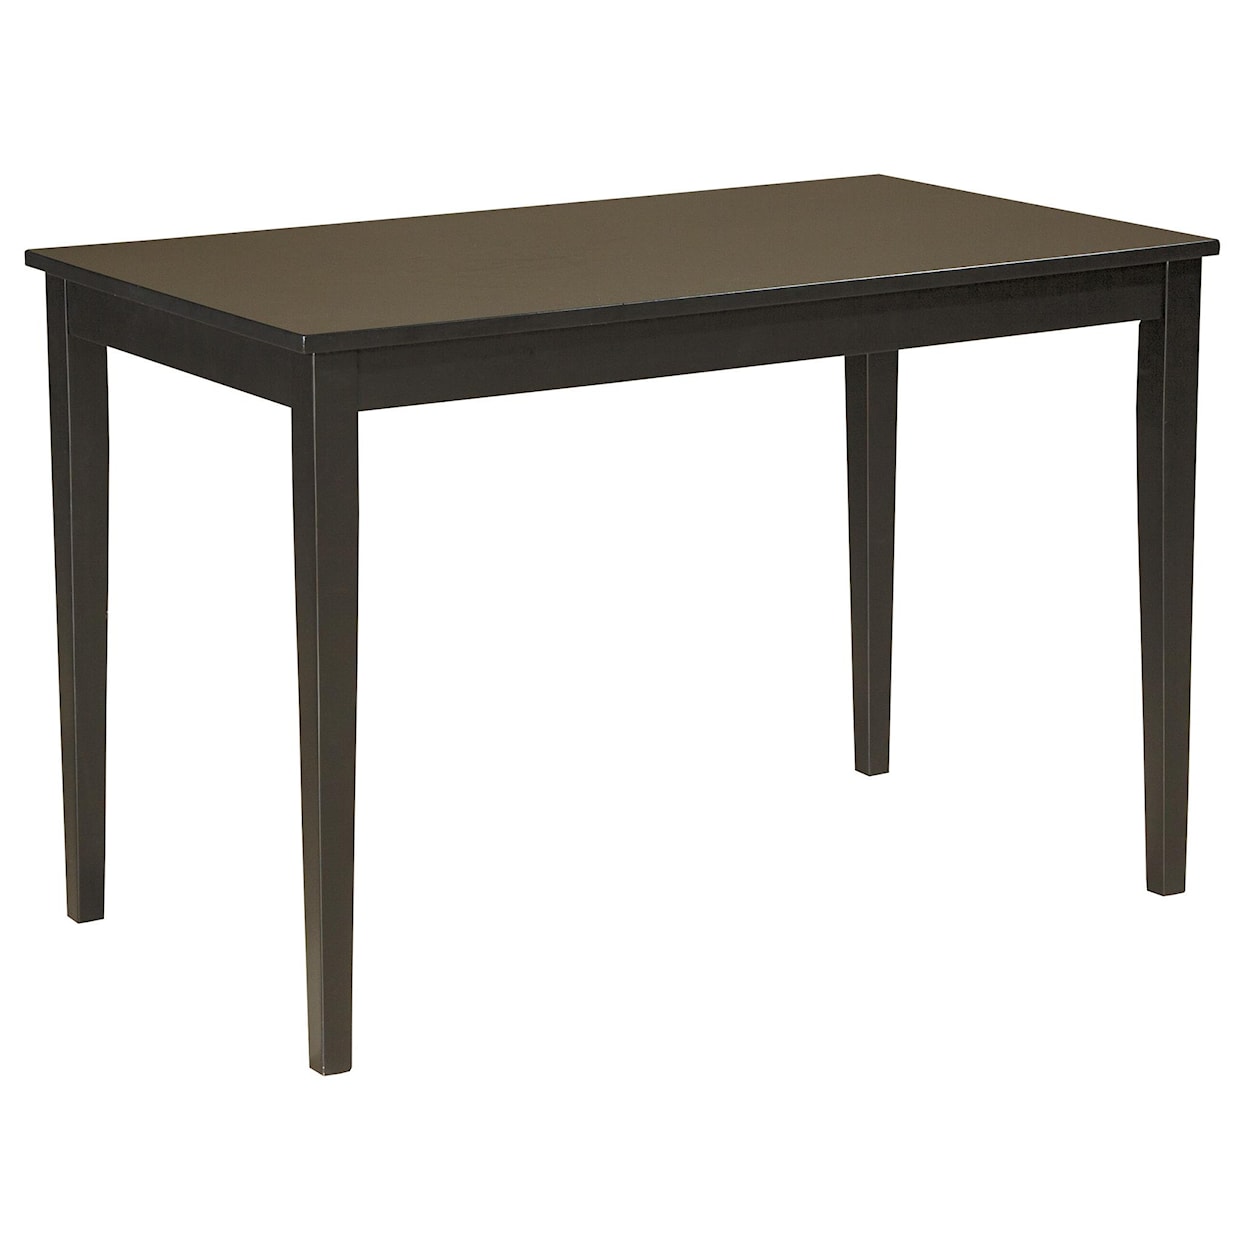 Ashley Furniture Signature Design Kimonte 5-Piece Rectangular Table Set